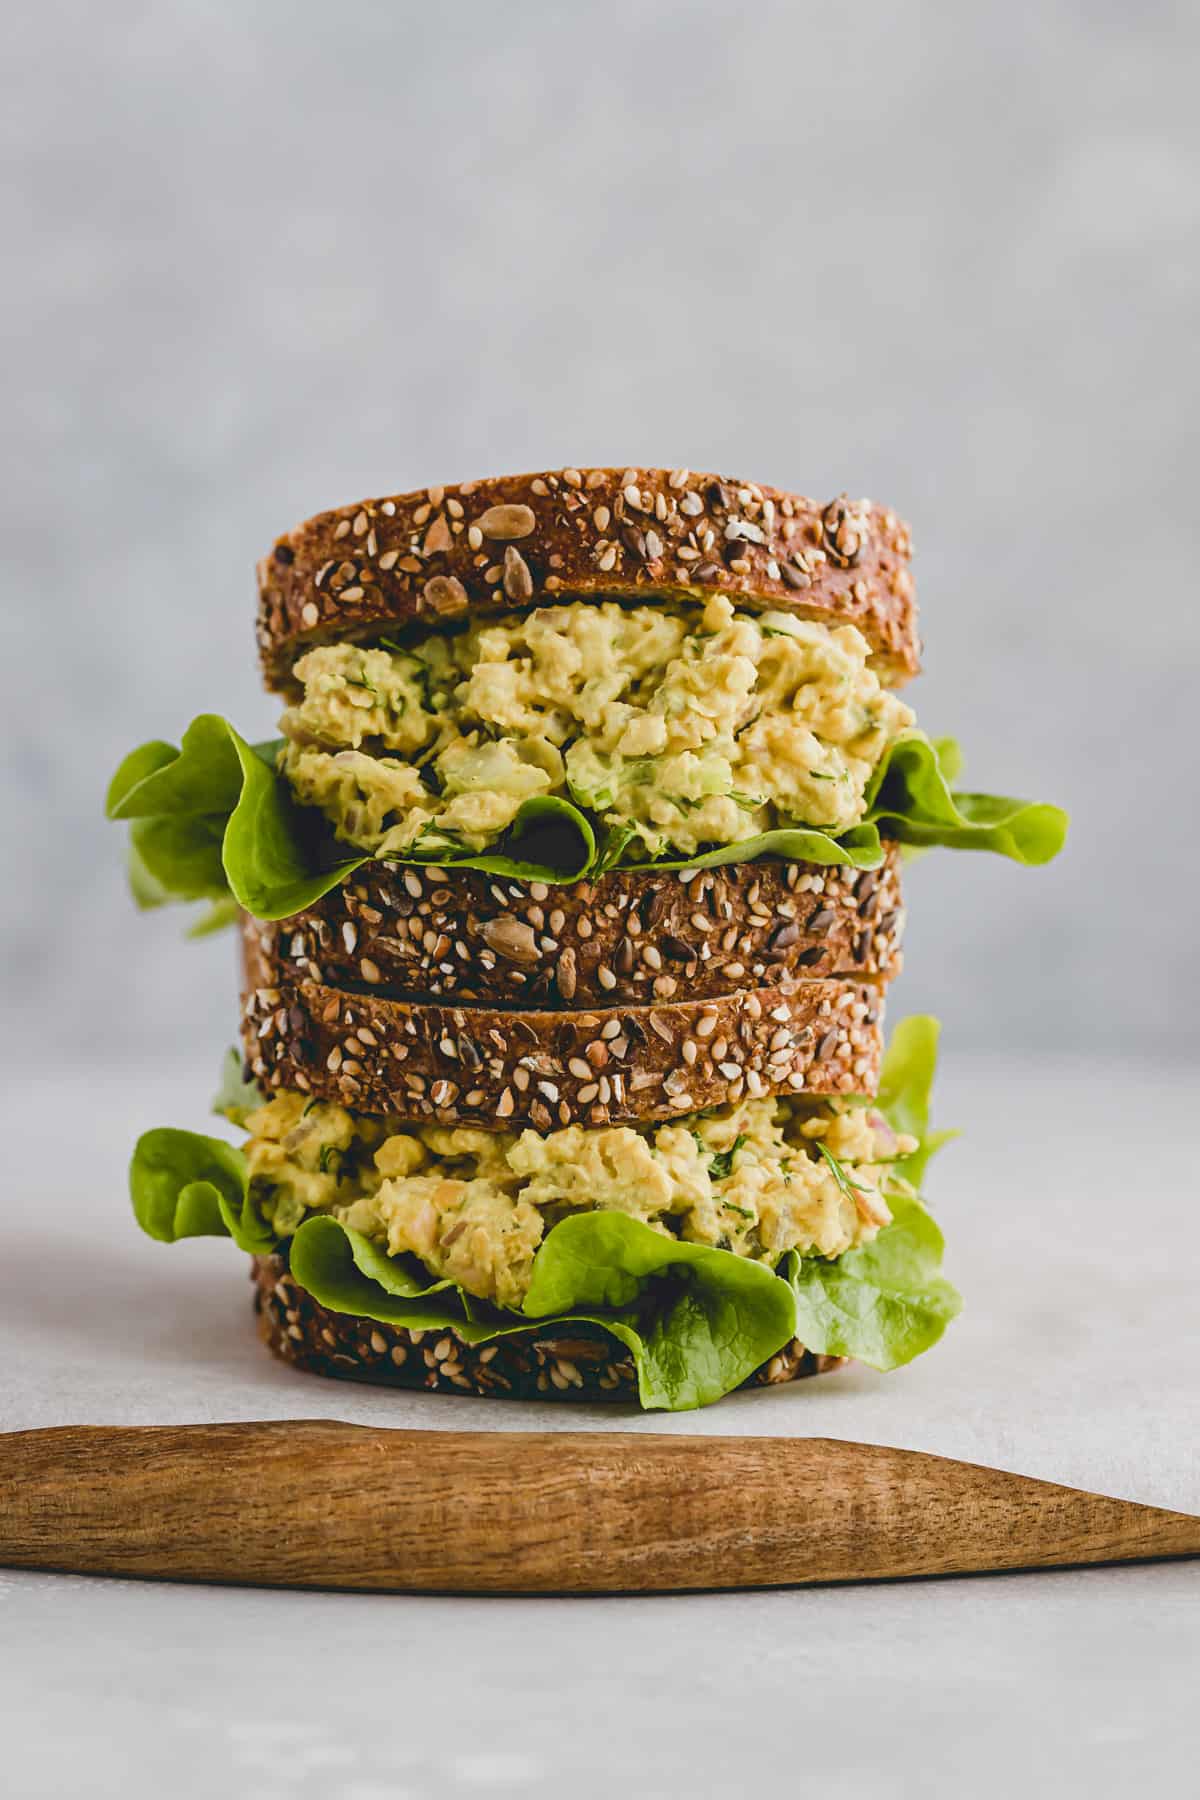 vegan egg salad sandwich with chickpeas